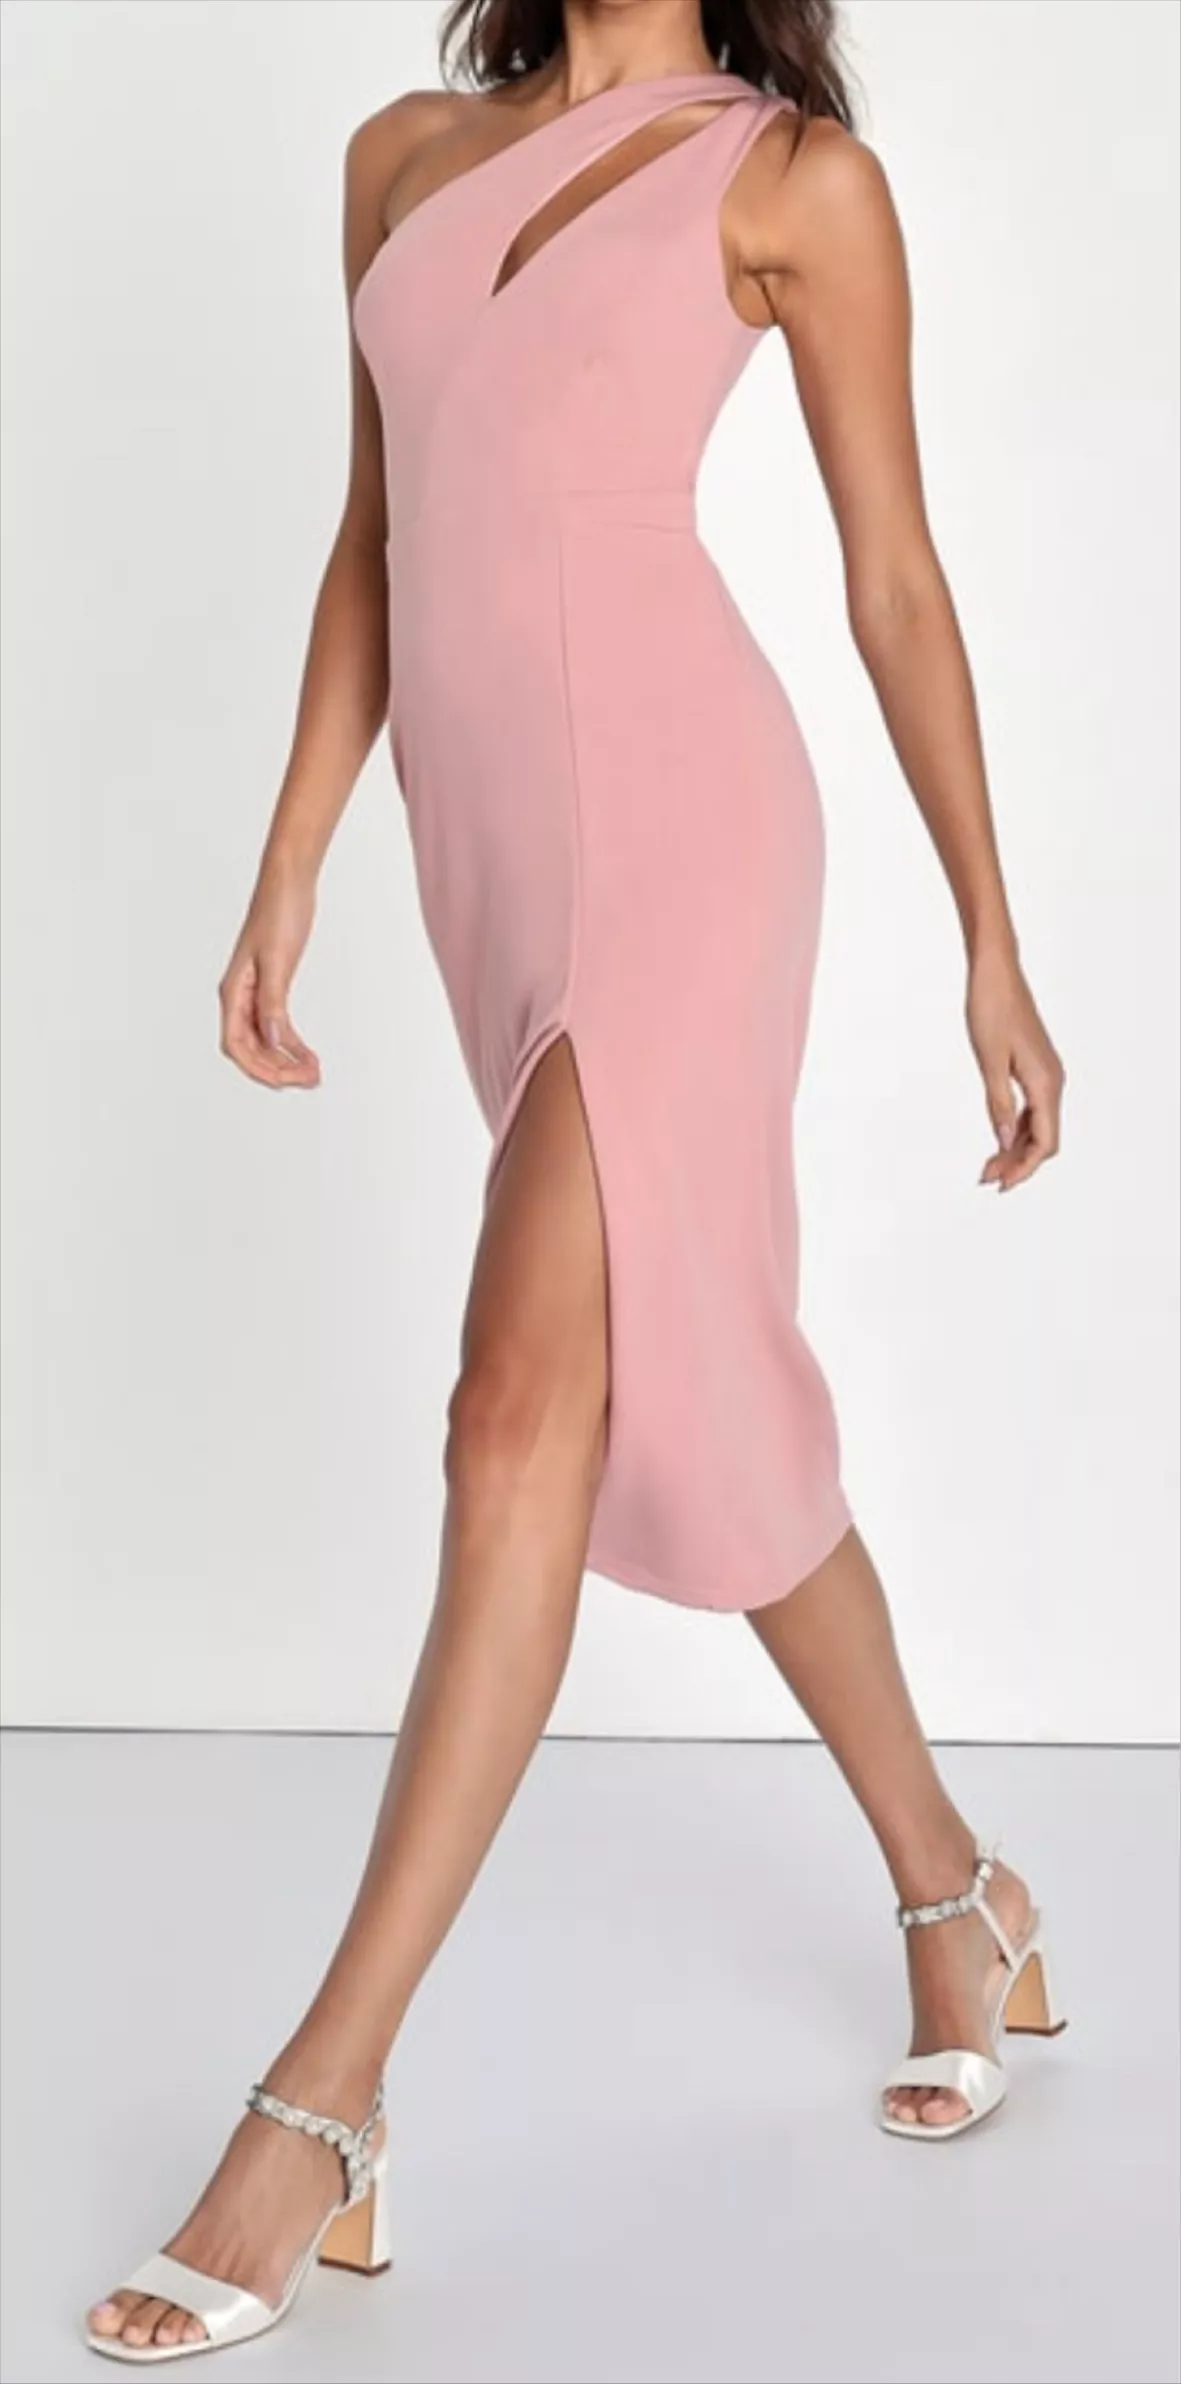 Blush Pink Midi Dress - Asymmetrical Dress - One-Shoulder Dress - Lulus